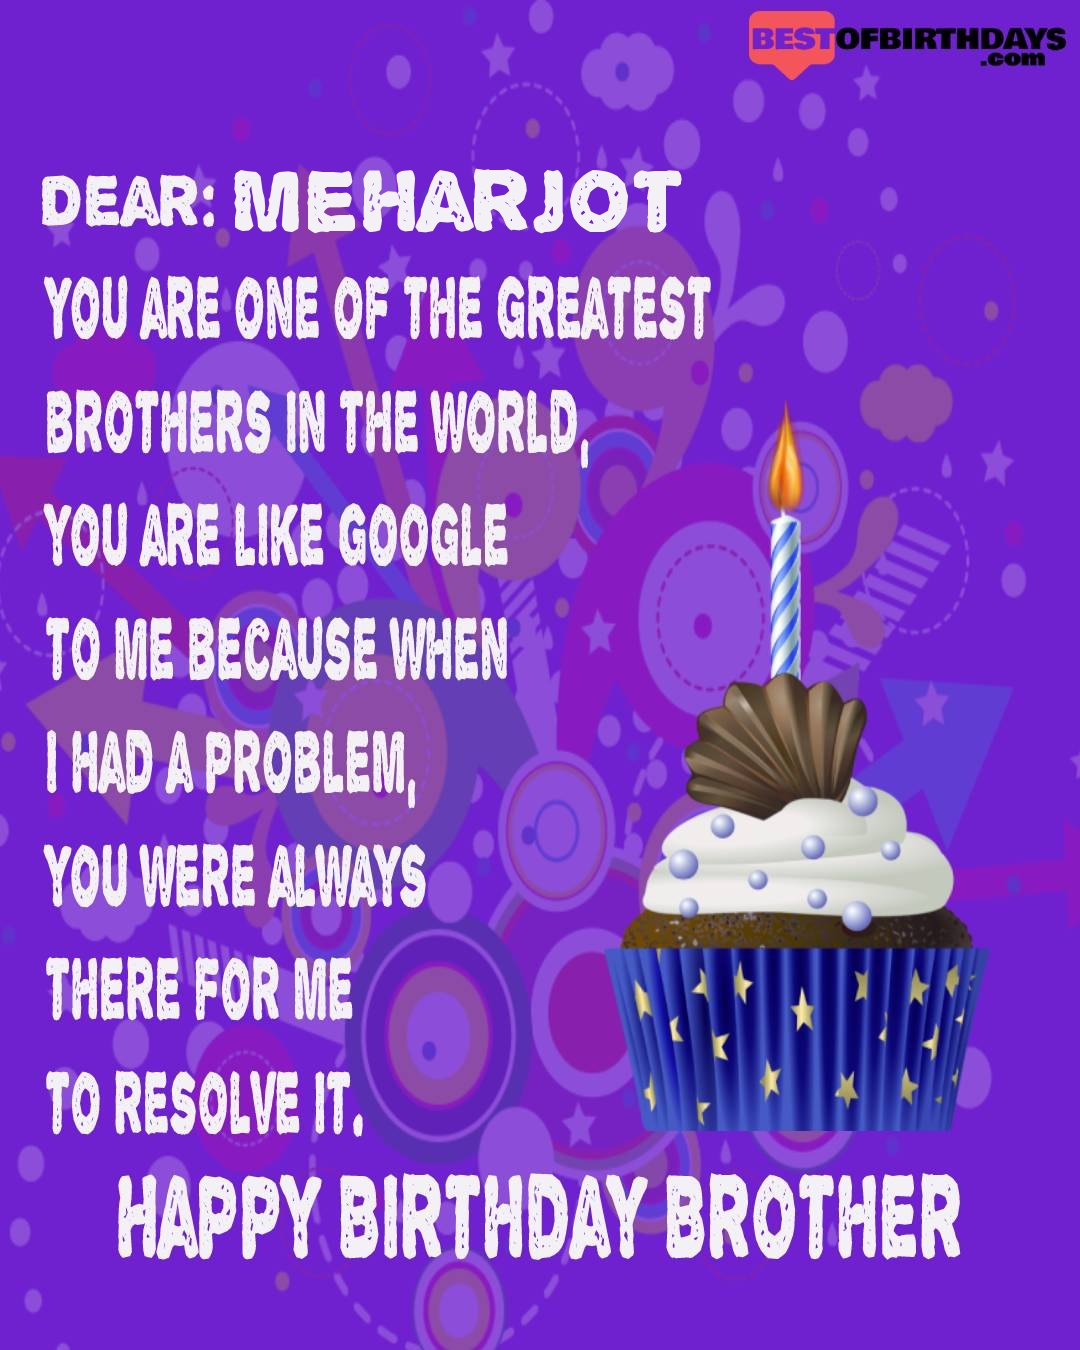 Happy birthday meharjot bhai brother bro